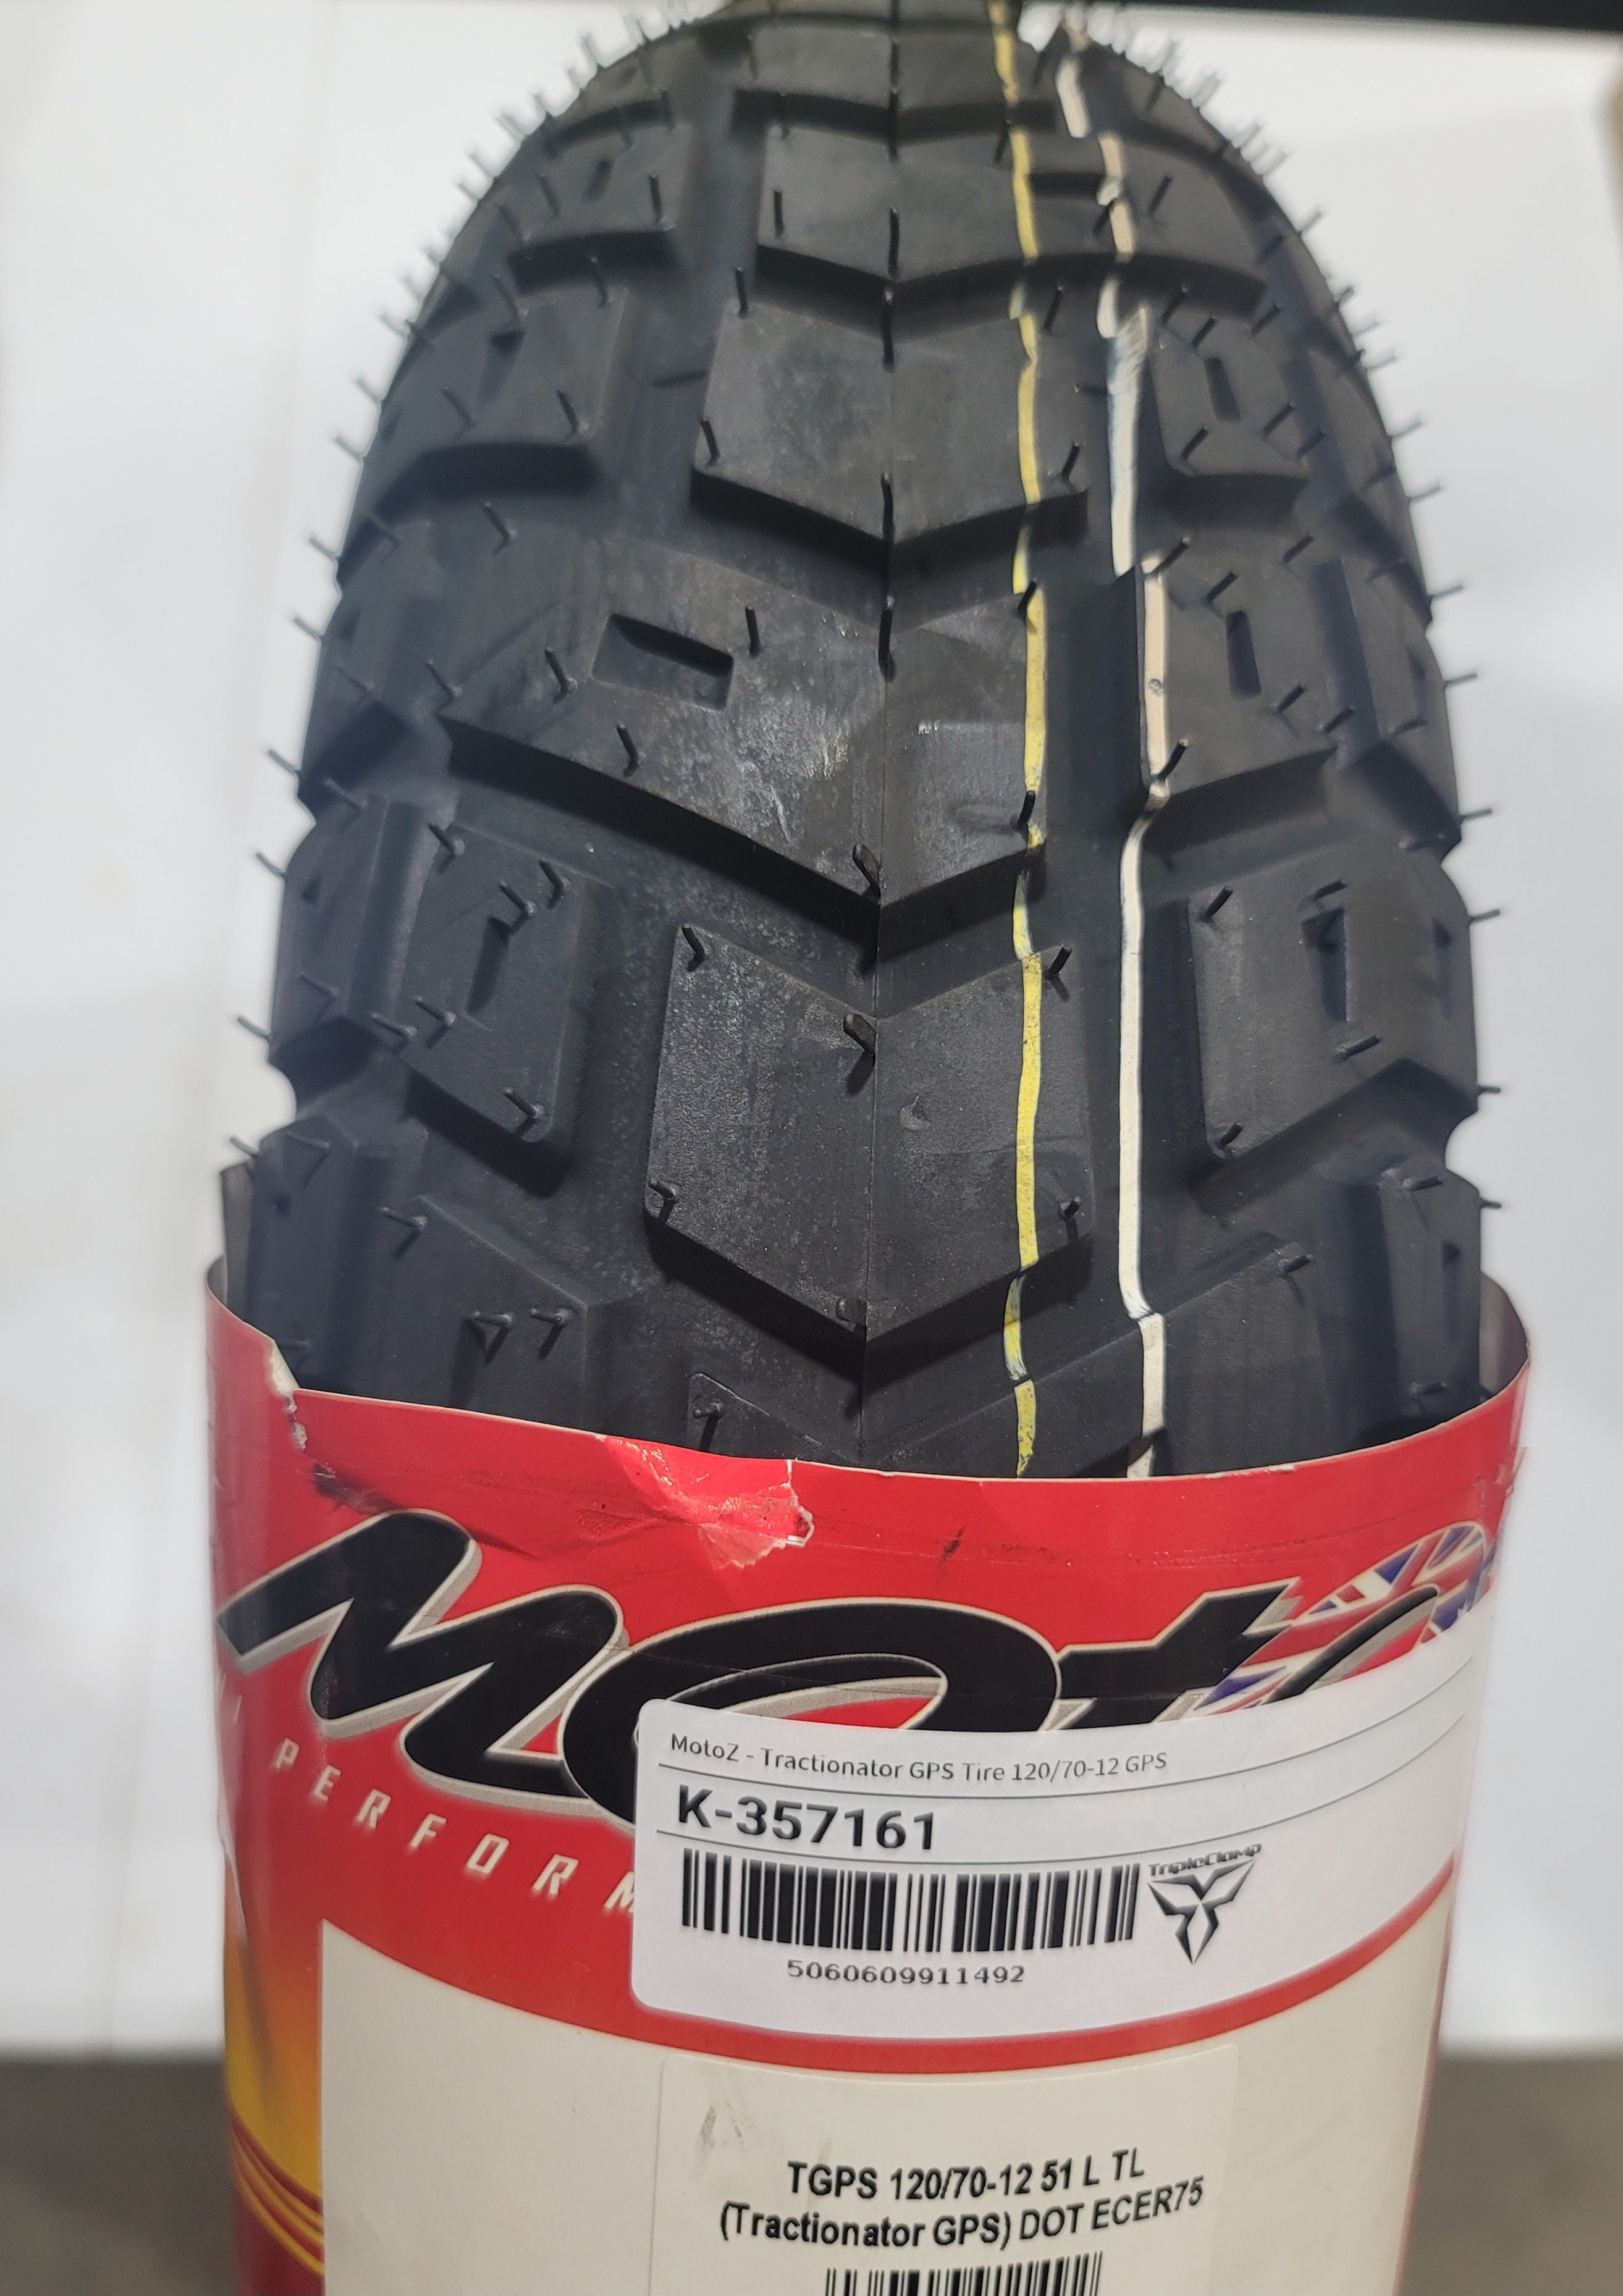 MotoZ - Tractionator GPS Tire